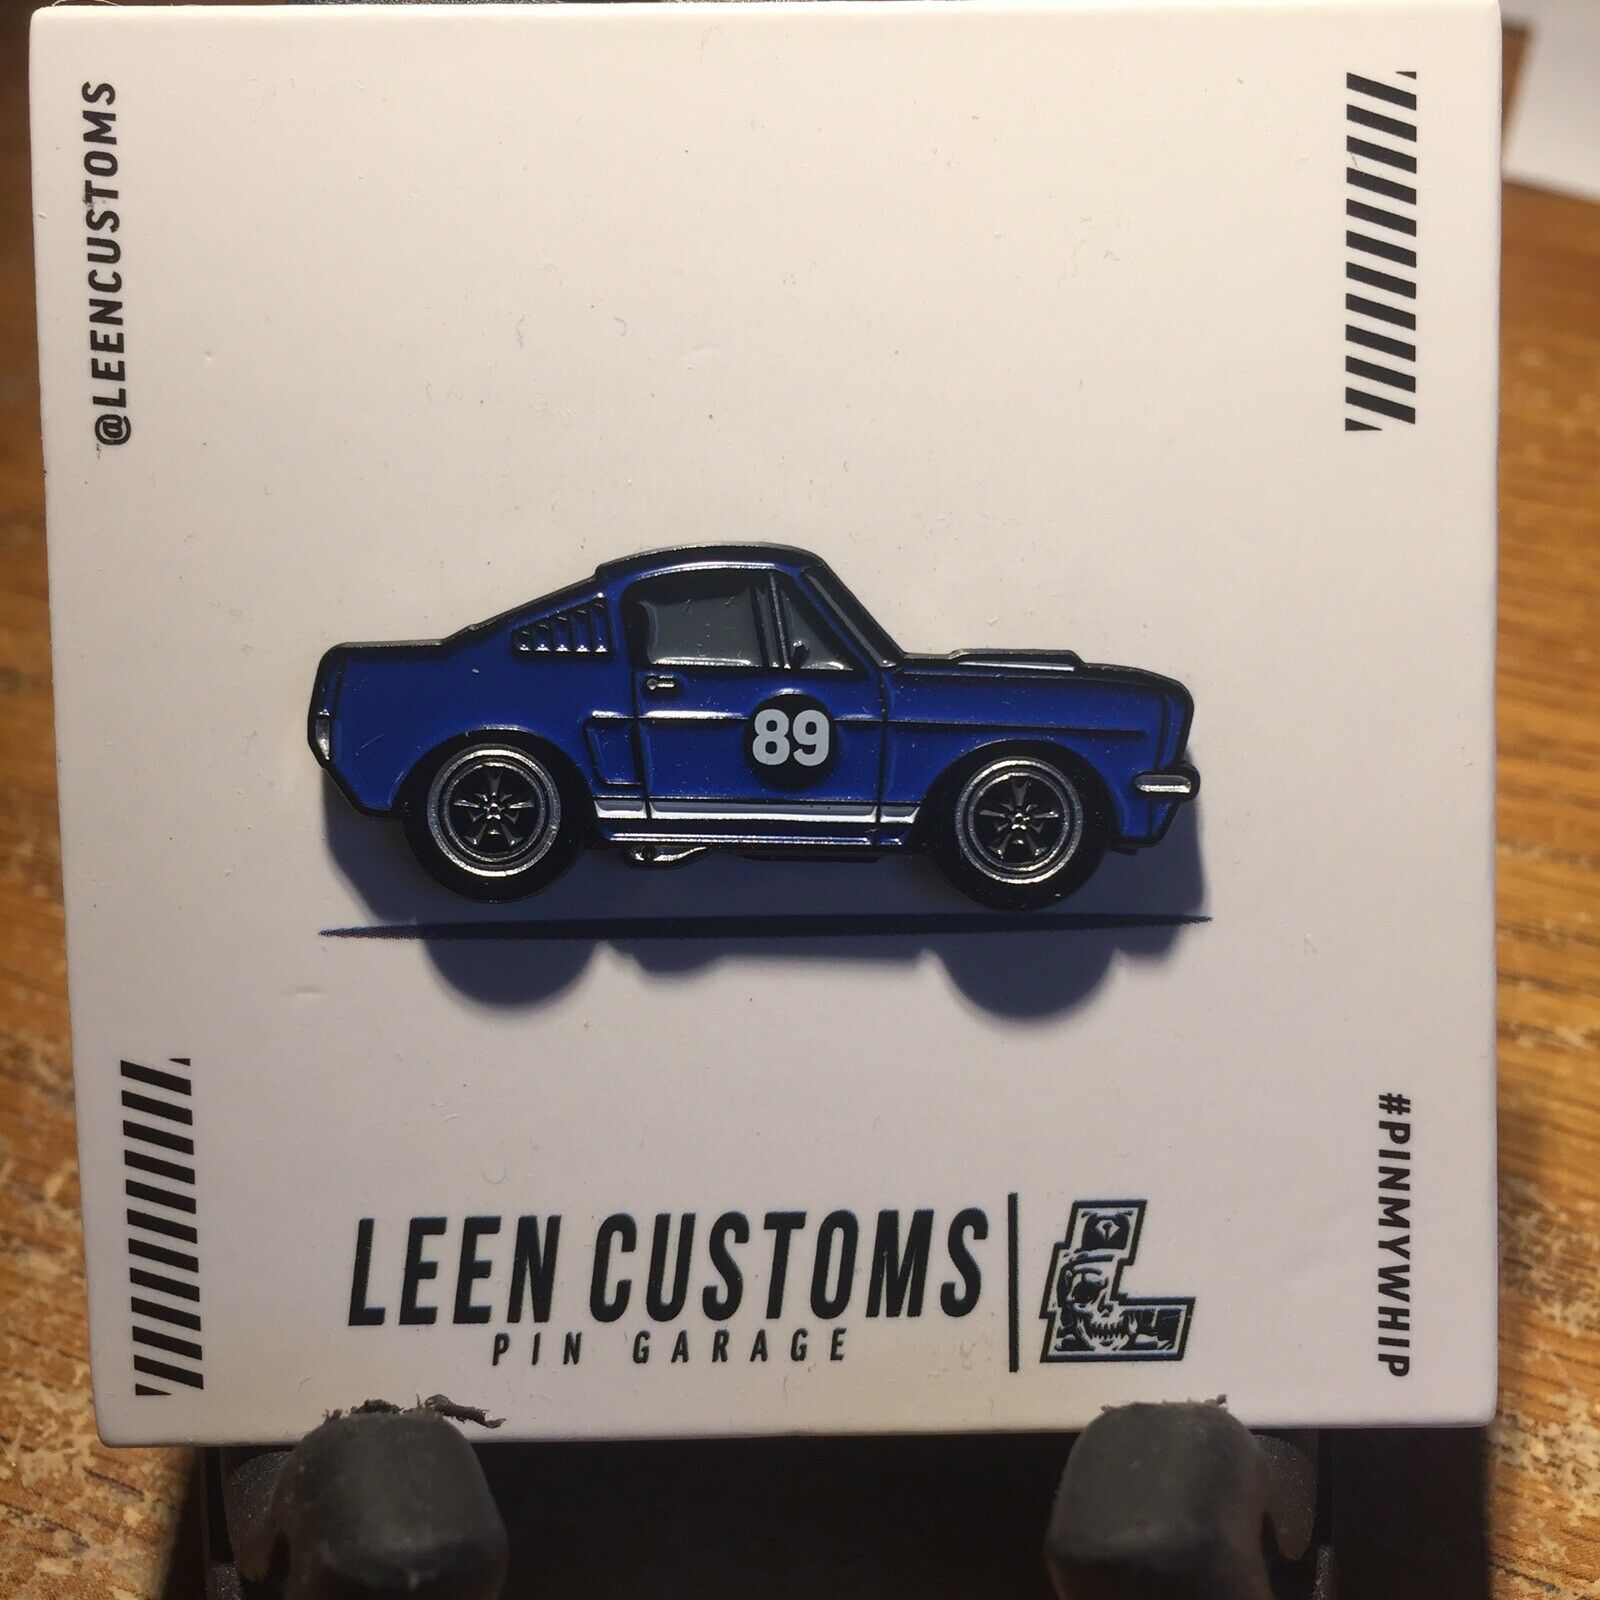 Leen Customs Pins - Mustang Shelby Gt350 Pin